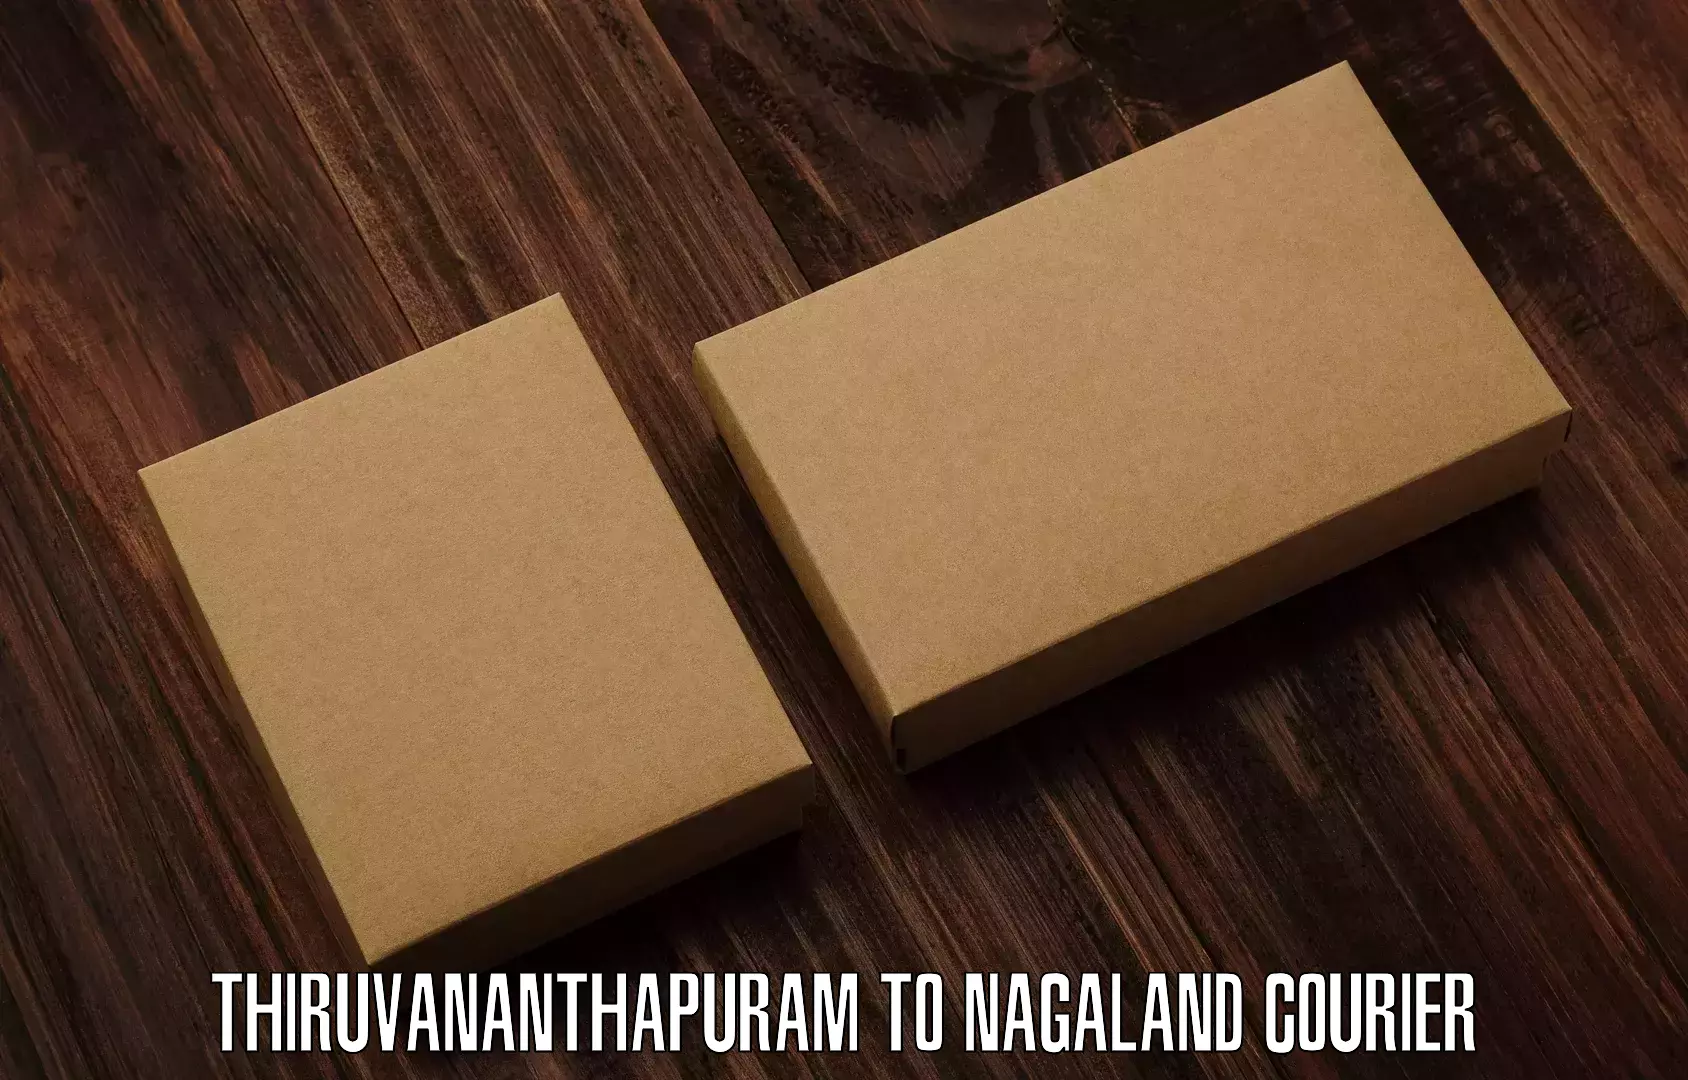 Express delivery capabilities Thiruvananthapuram to Dimapur